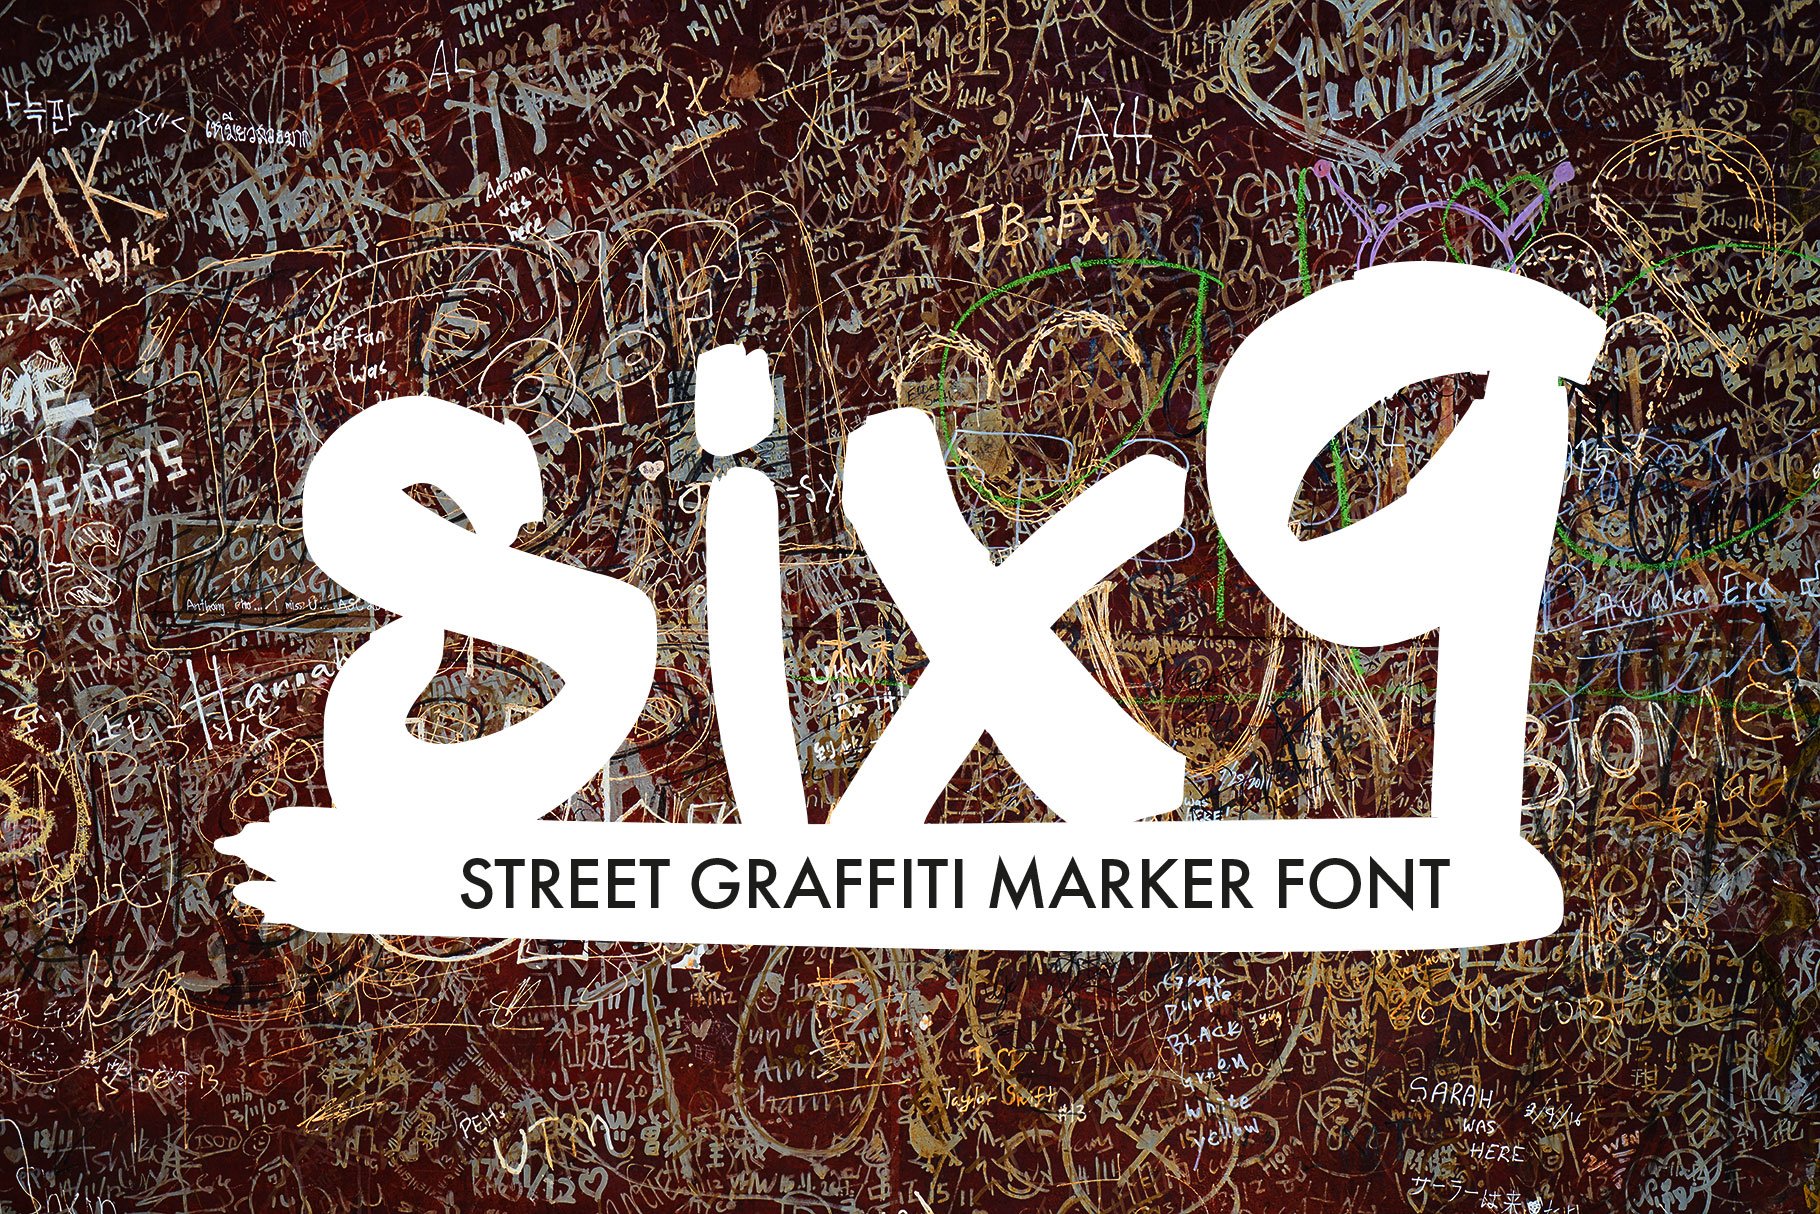 Graffiti Tags Marker Font Street Art Lettering Designer Urban